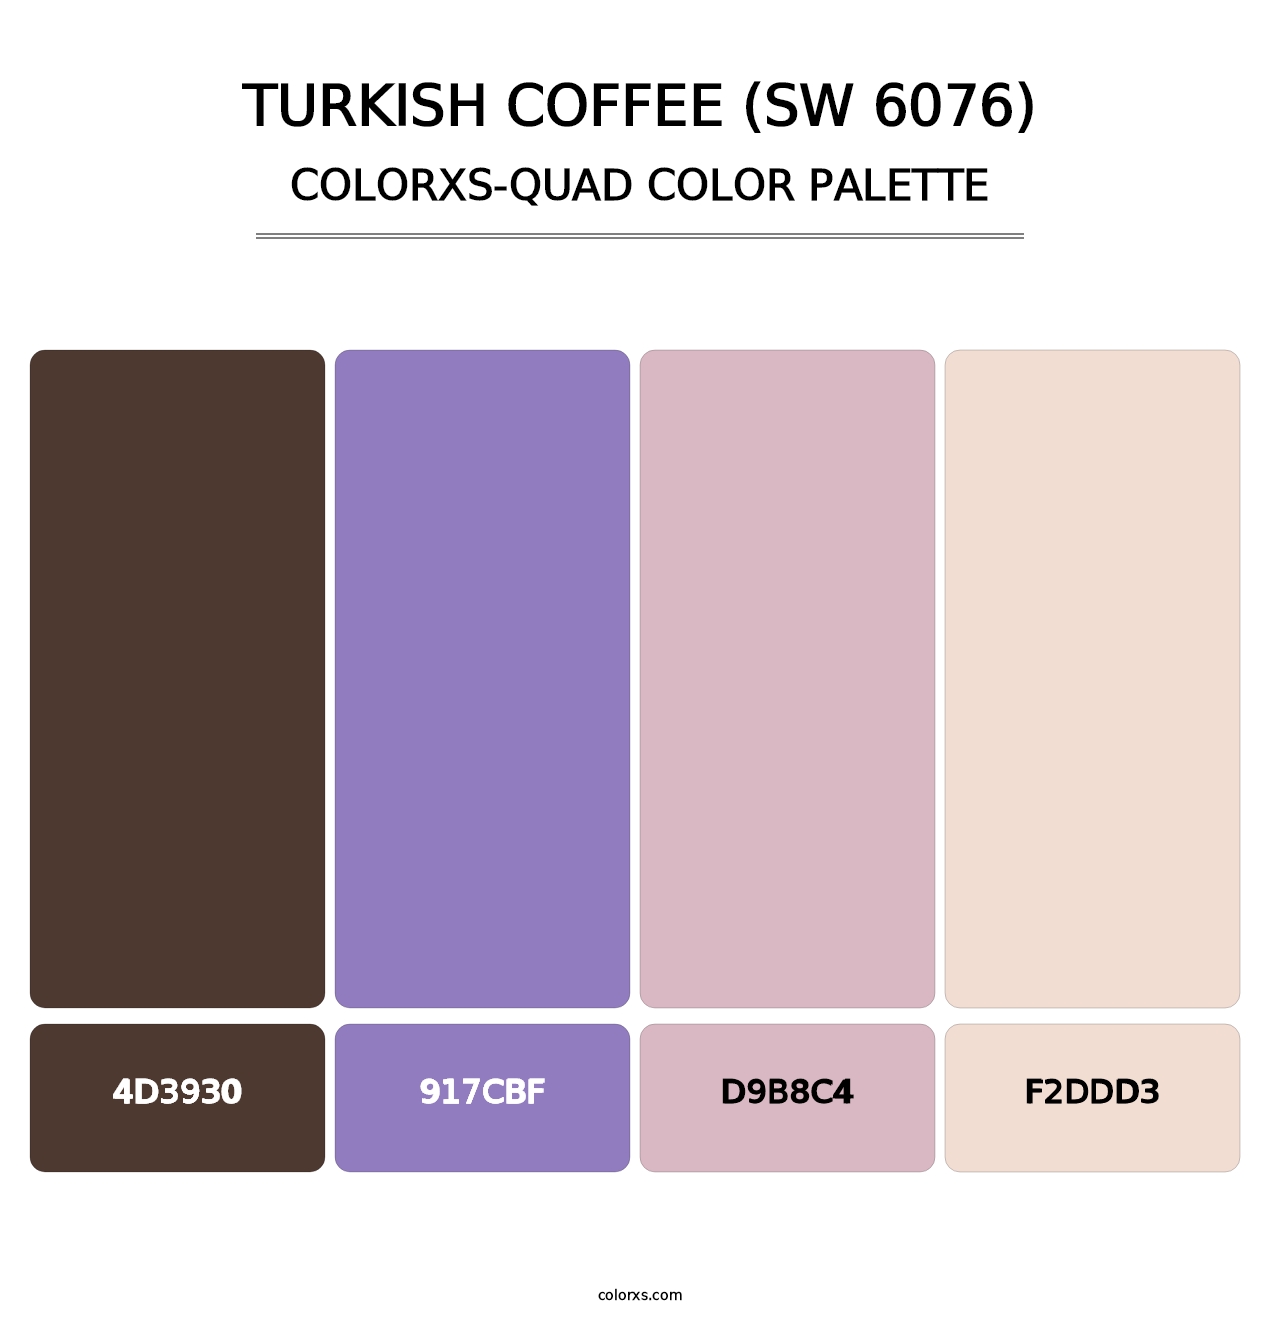 Turkish Coffee (SW 6076) - Colorxs Quad Palette